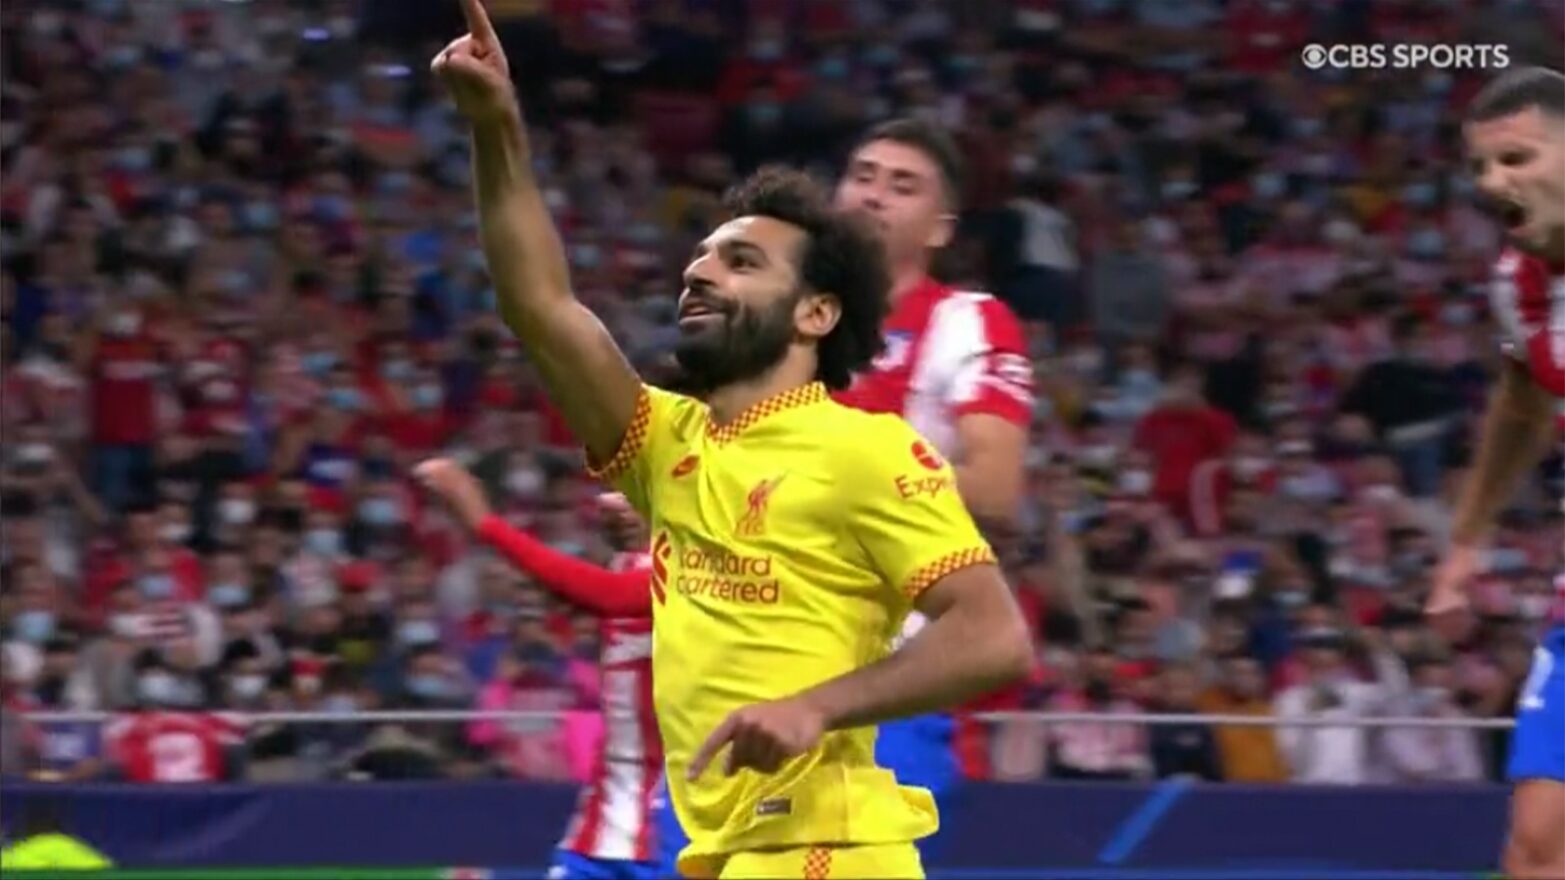 Paramount Plus screenshot of soccer player Mohamed Salah celebrating a goal.